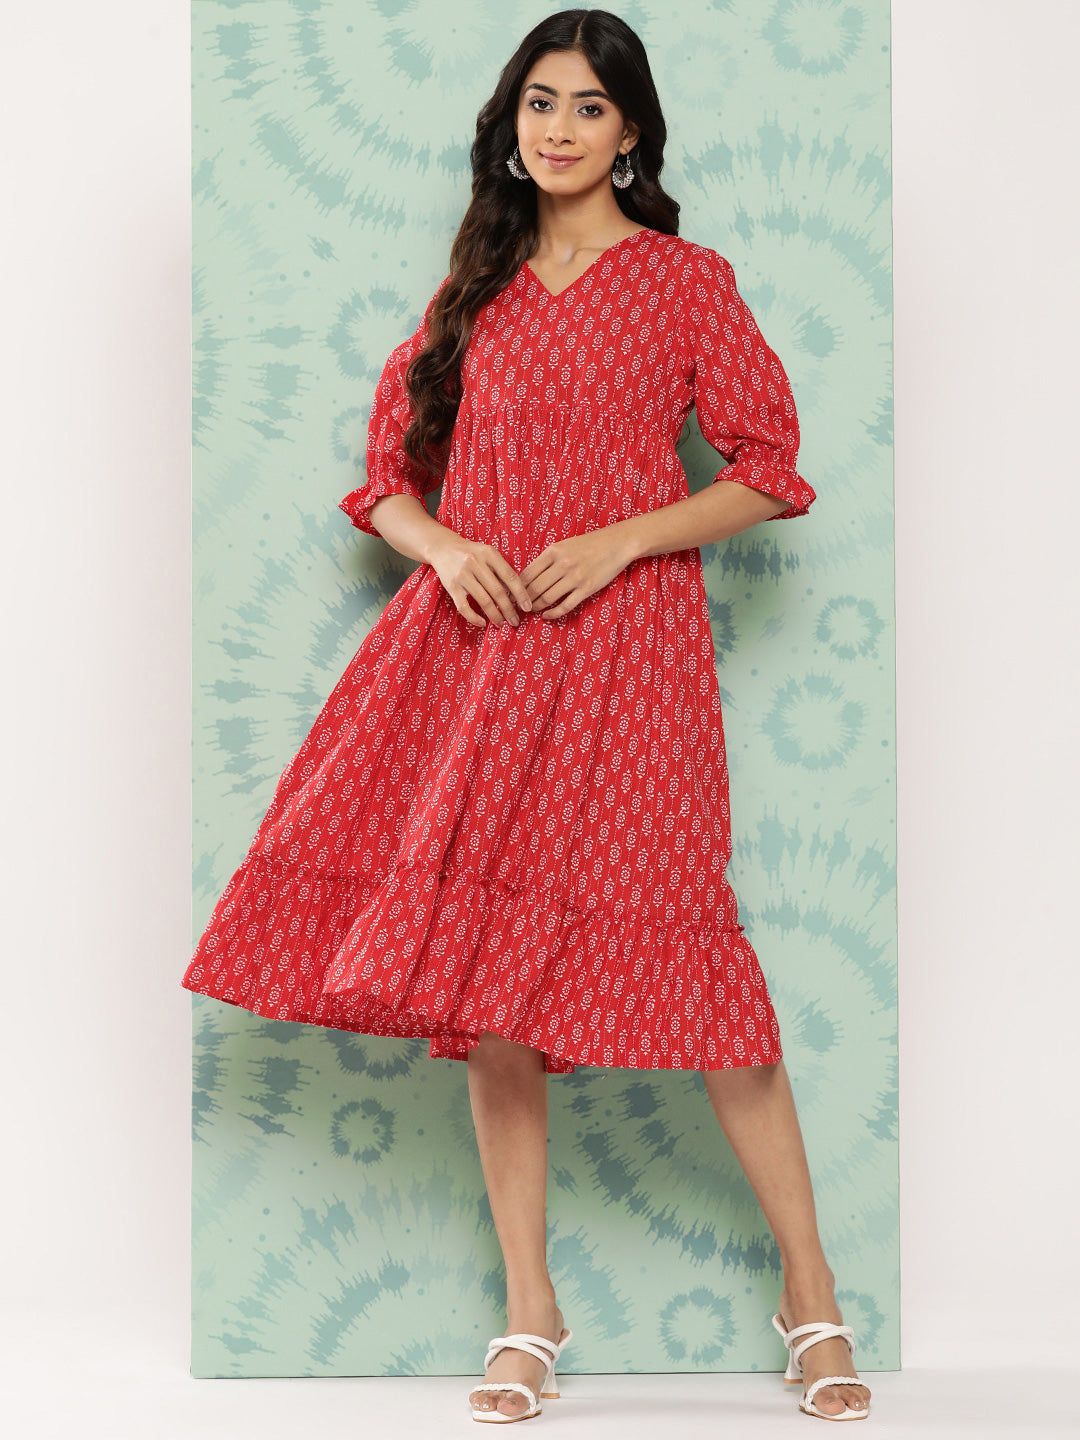 Women's Ethnic Motifs Printed Red Cotton Dress - Janasya